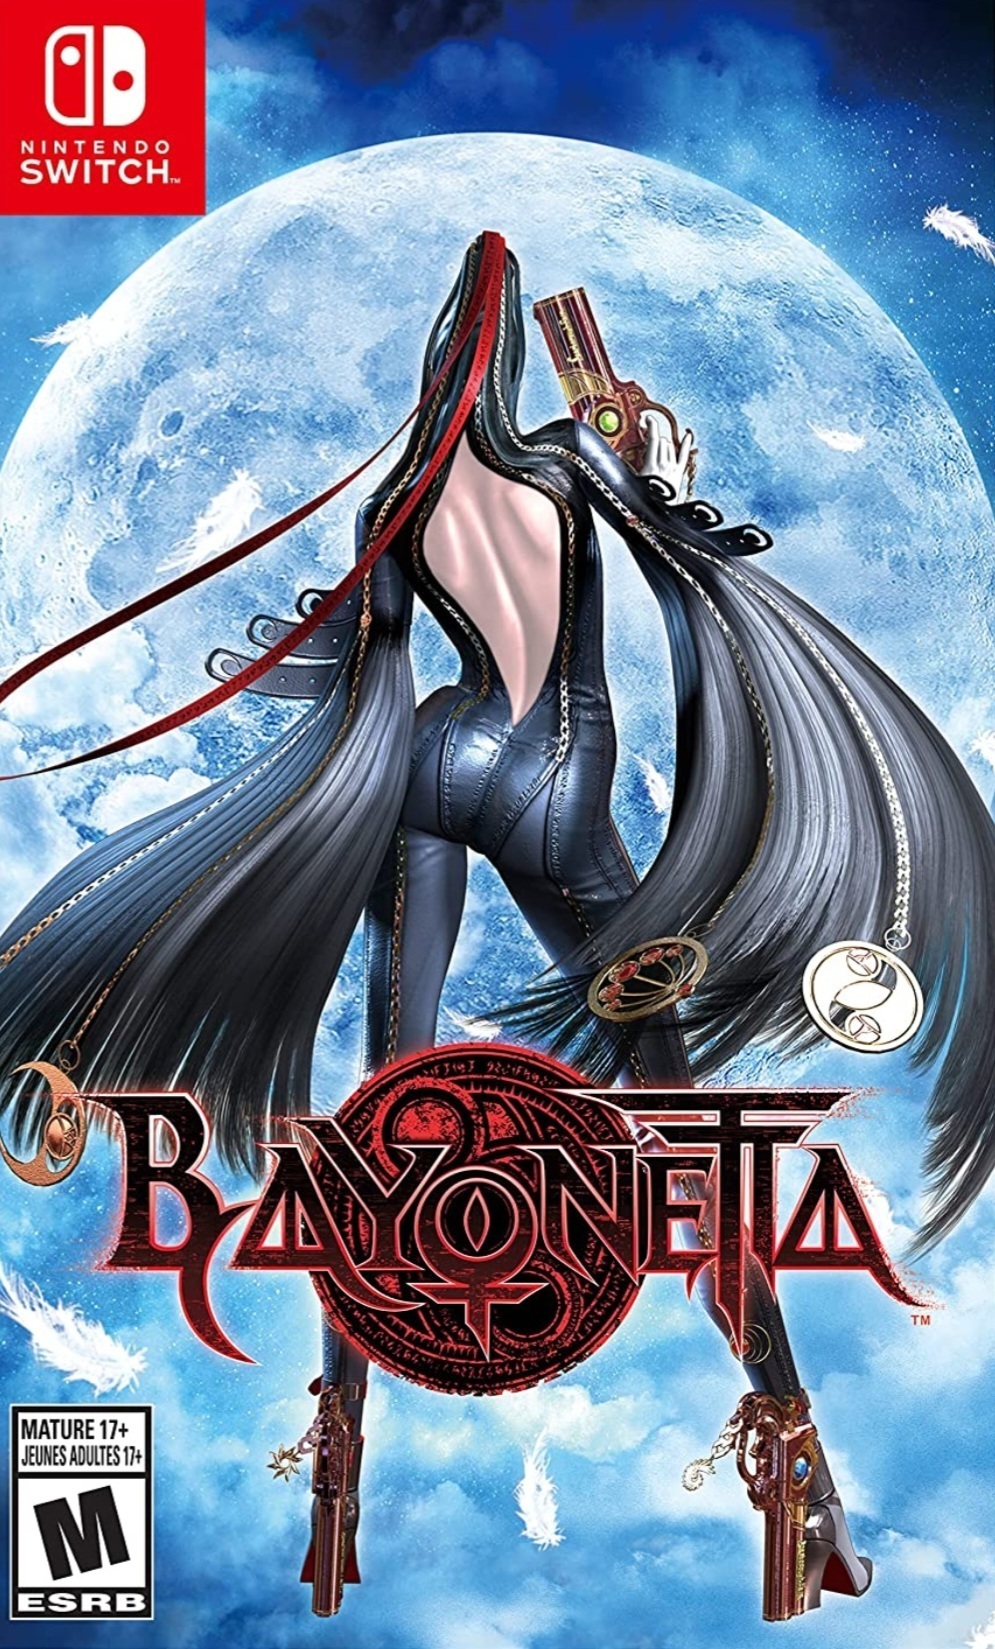 Bayonetta (video game), Nintendo